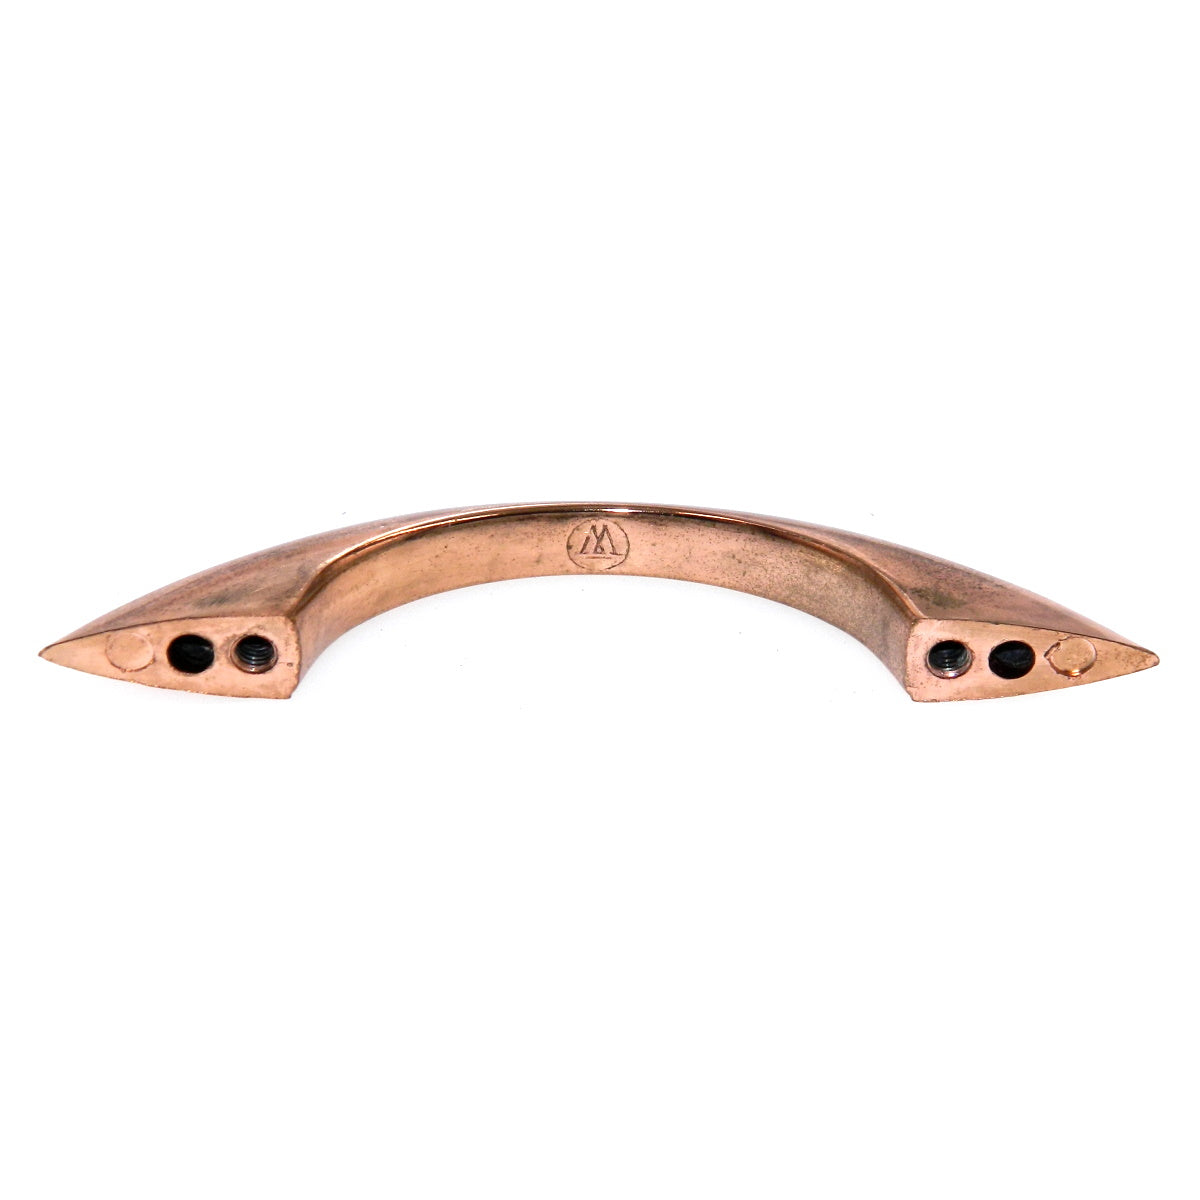 Washington Comfort Grip Polished Copper 2 3/4" Ctr. Cabinet Handle 1341R-CU